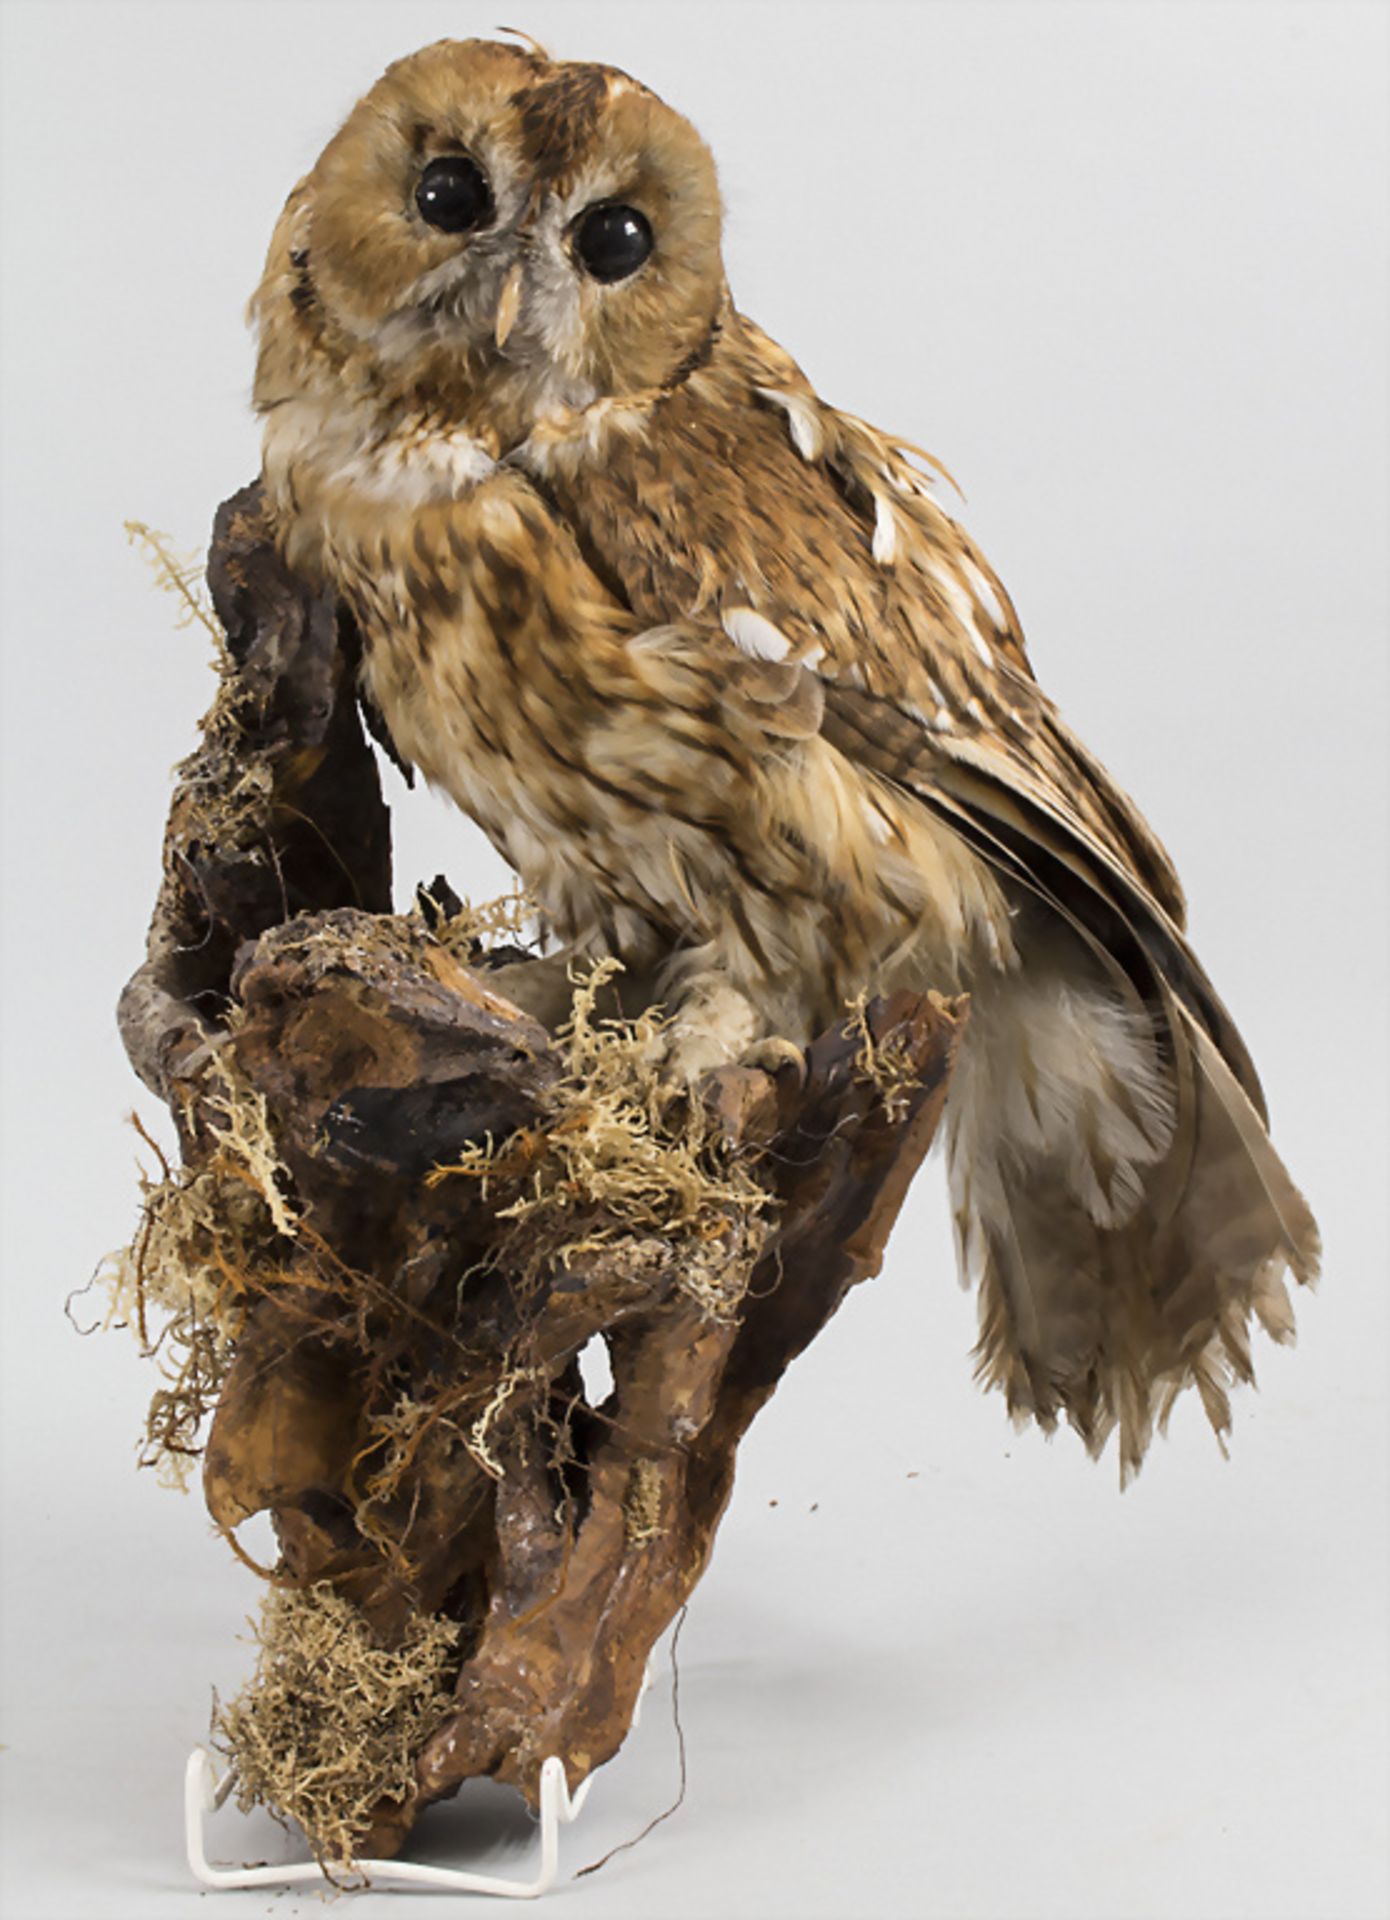 Tierpräparat 'Waldkauz' / An animal preparation 'Tawny owl'